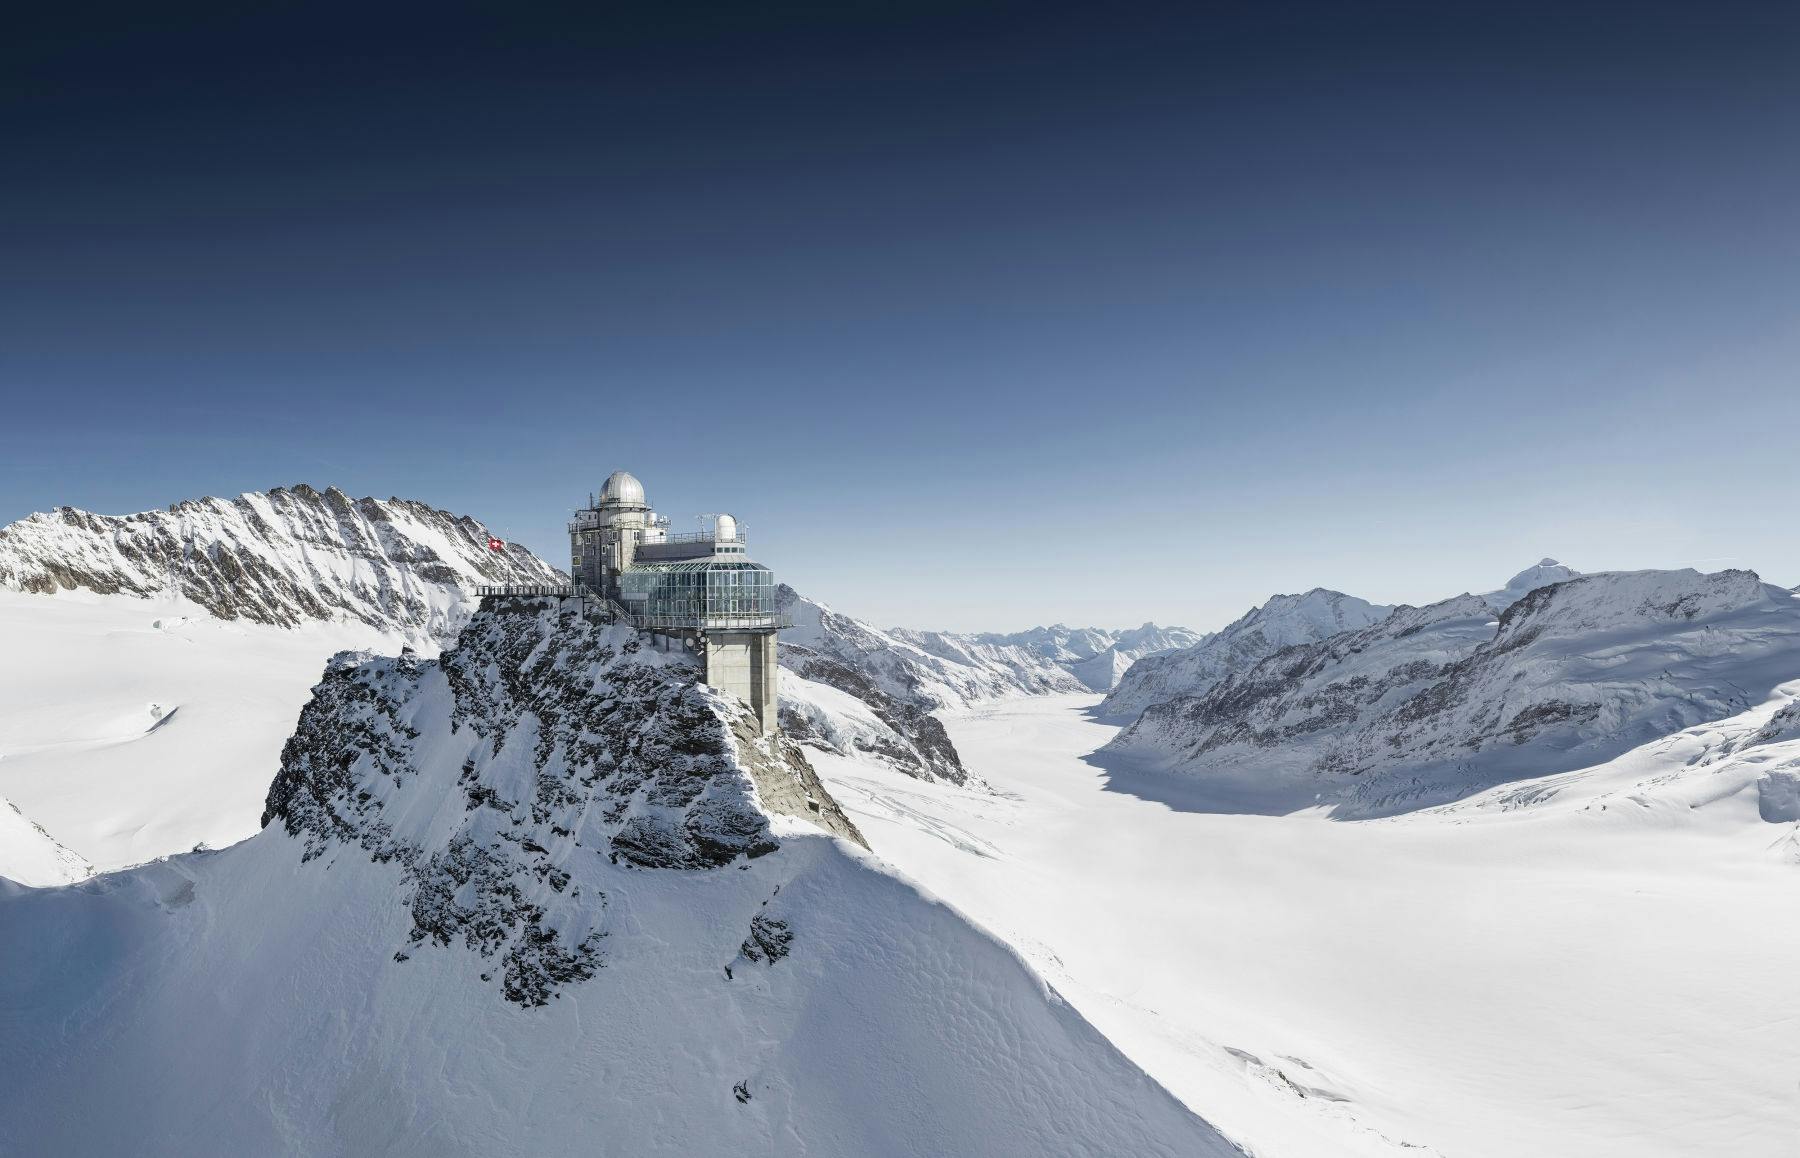 O melhor bilhete da Europa para Jungfraujoch saindo de Interlaken